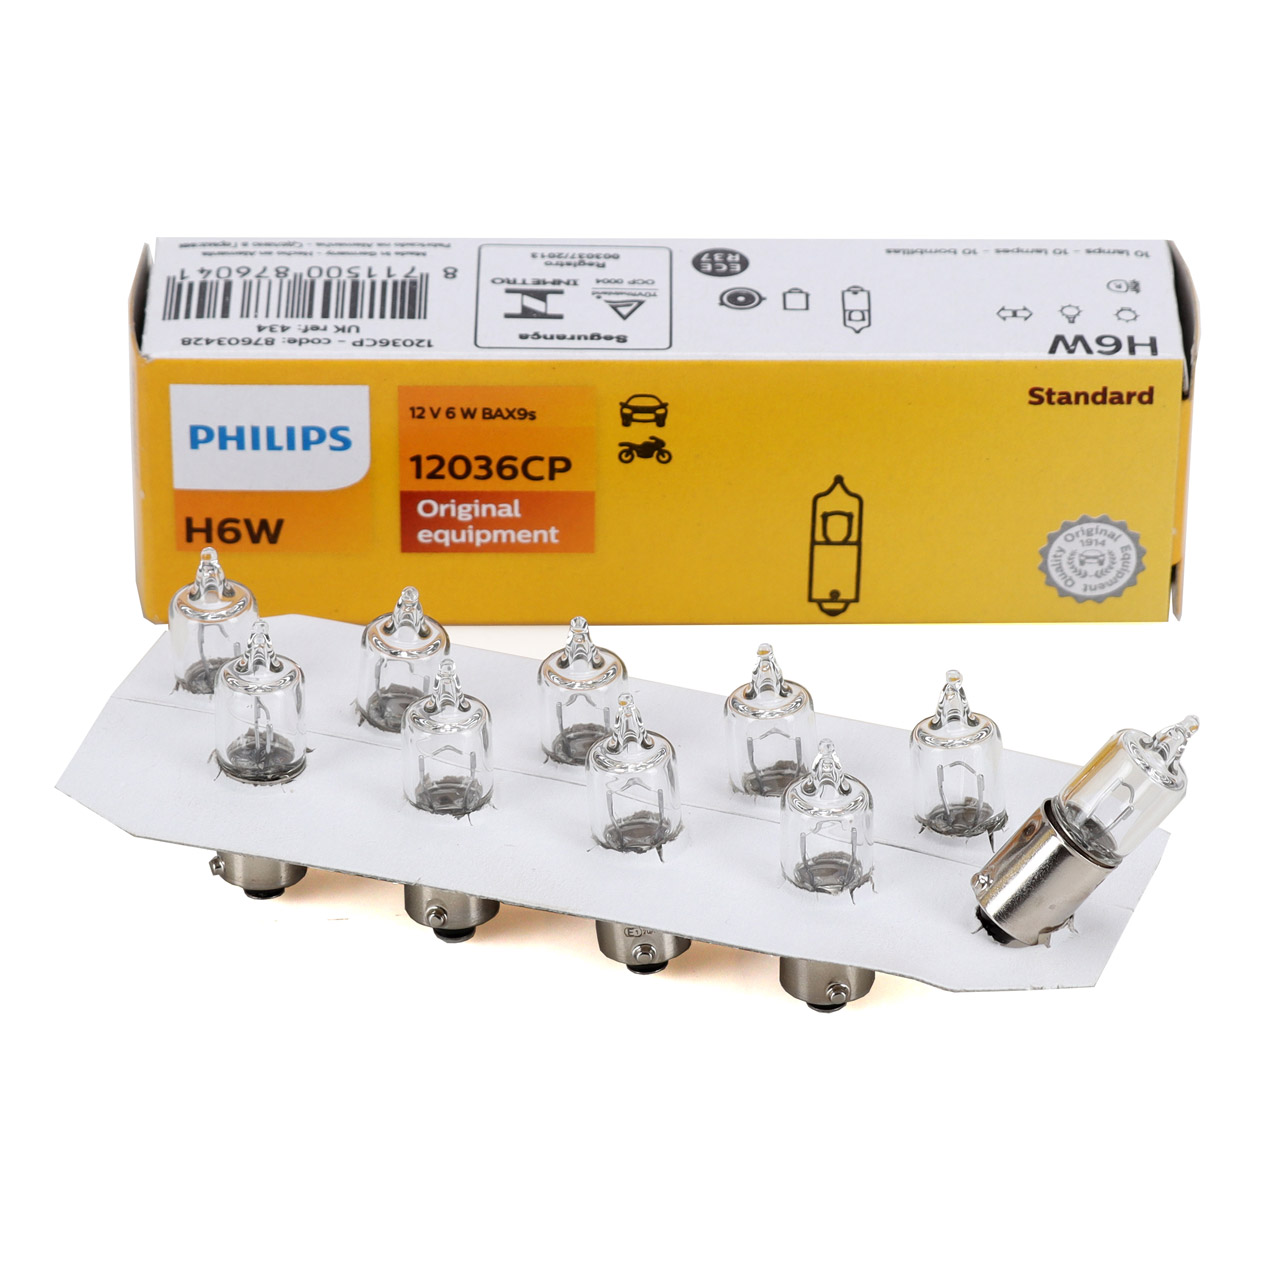 2x PHILIPS Ultinon Pro6000 HL Standard H7 LED Lampe mit Straßenzulassung  12V +220% 5.800K 